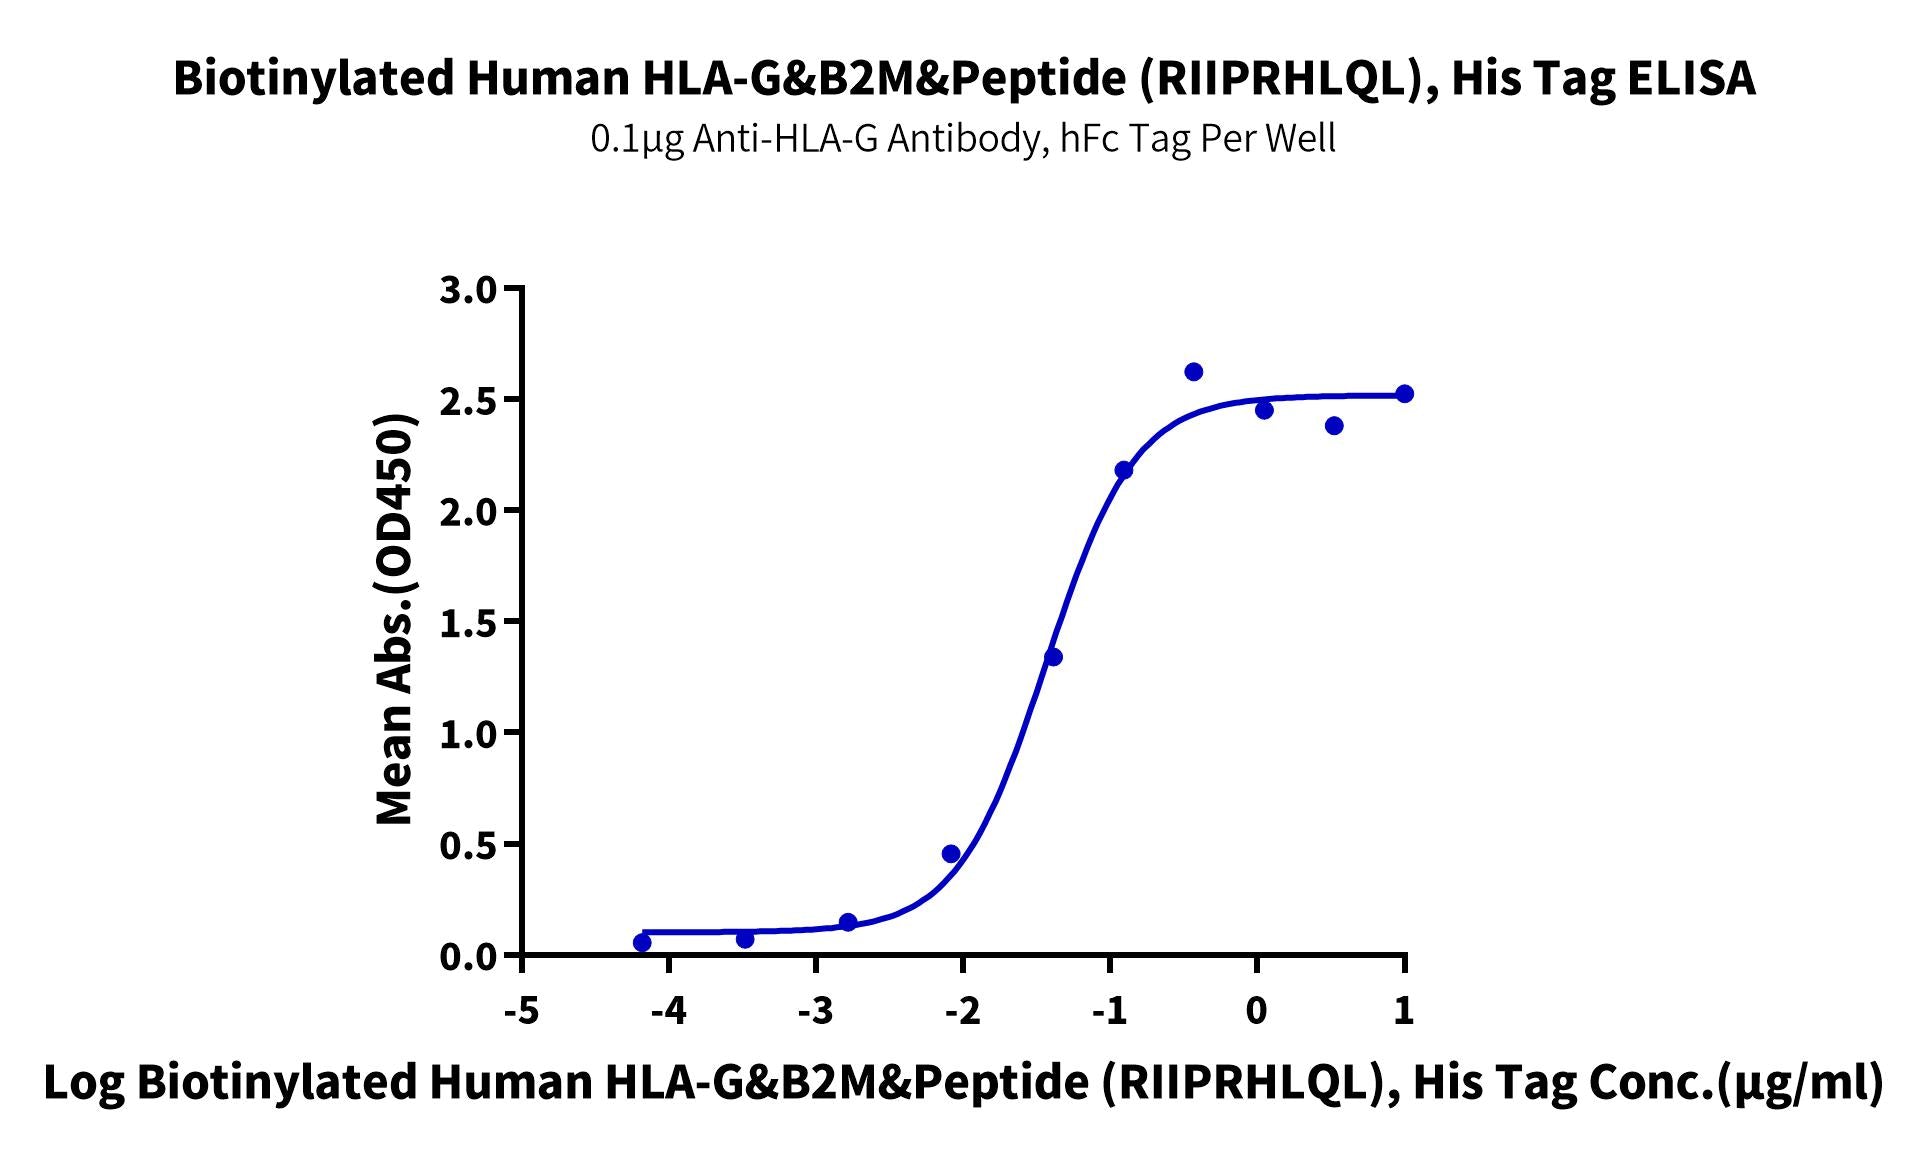 Biotinylated Human HLA-G&B2M&Peptide (RIIPRHLQL) Monomer Protein (HLG-HM41CB)